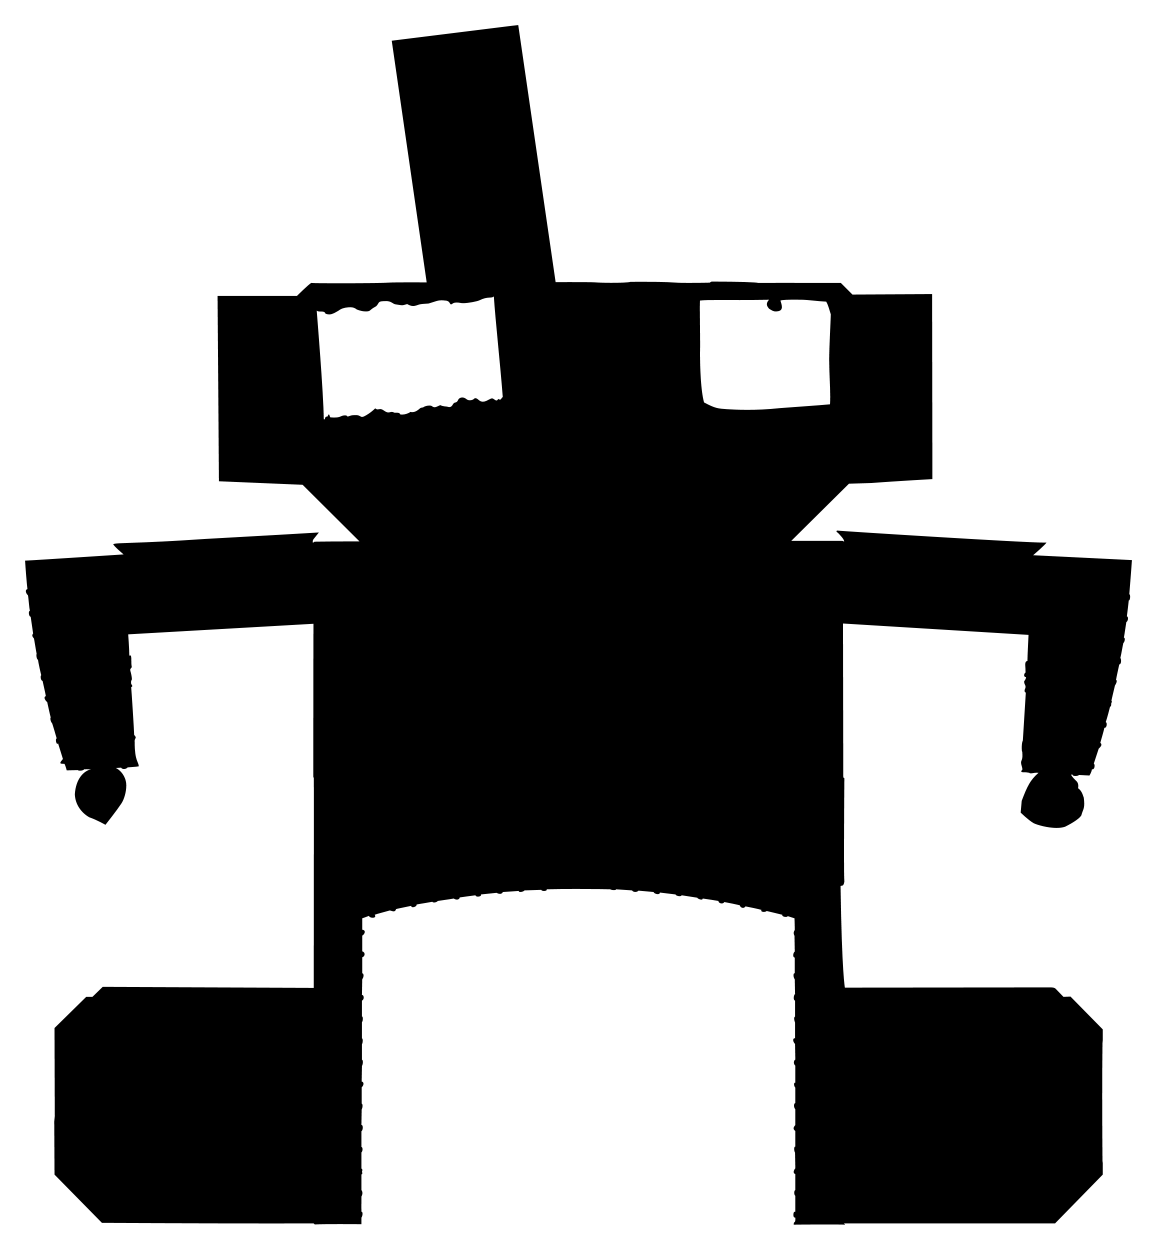 Hanuta Hazelnut Sticks (10 pack) BoxBot silhouette